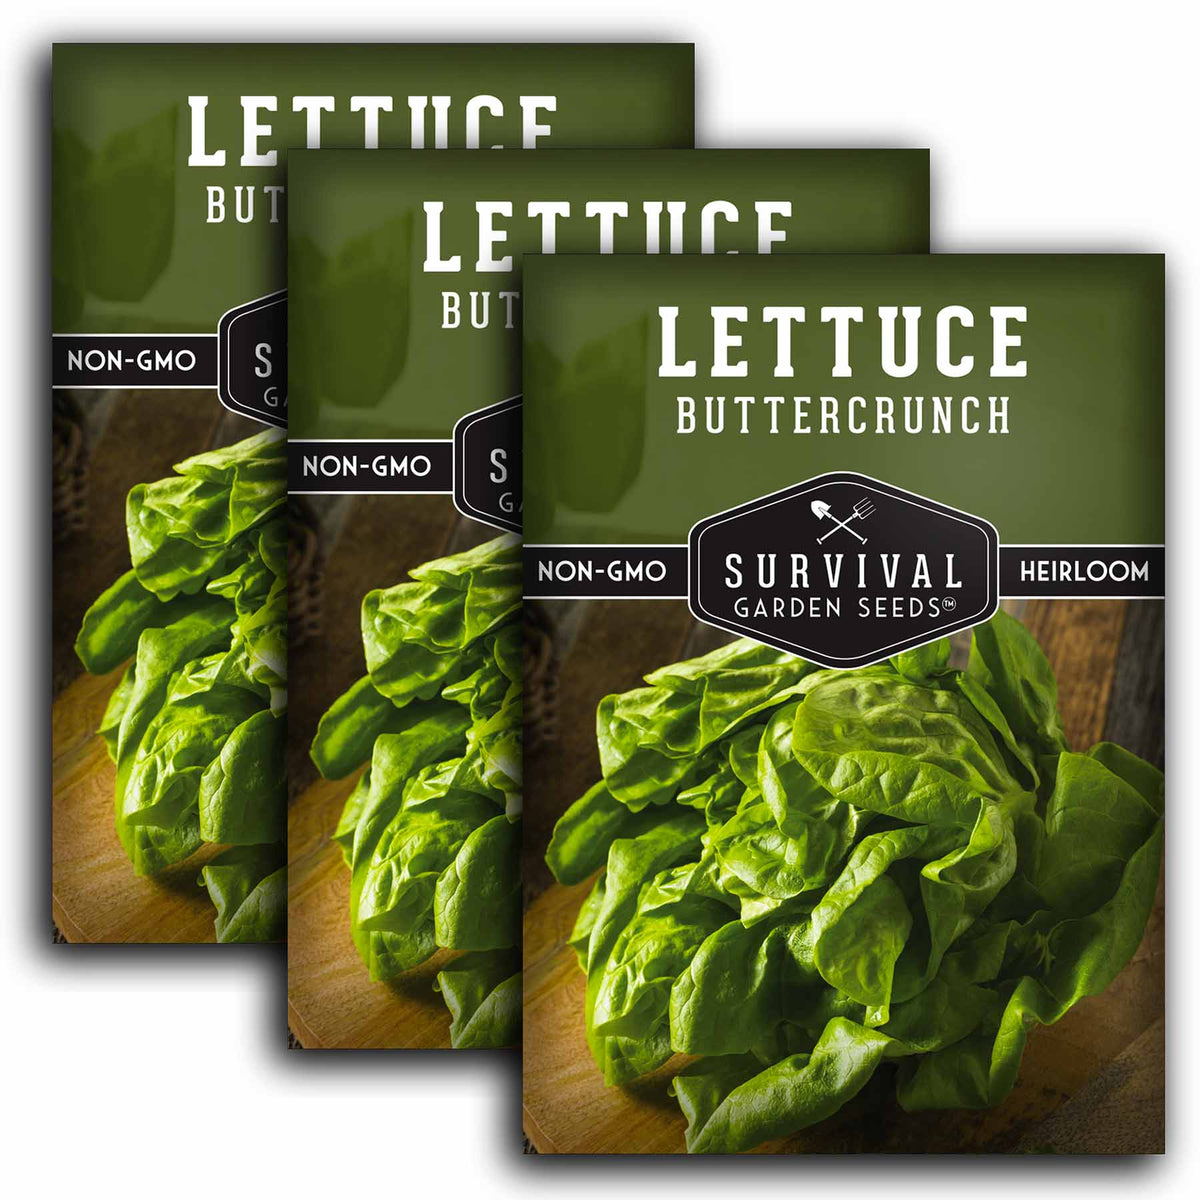 3 packets of Buttercrunch Lettuce seeds